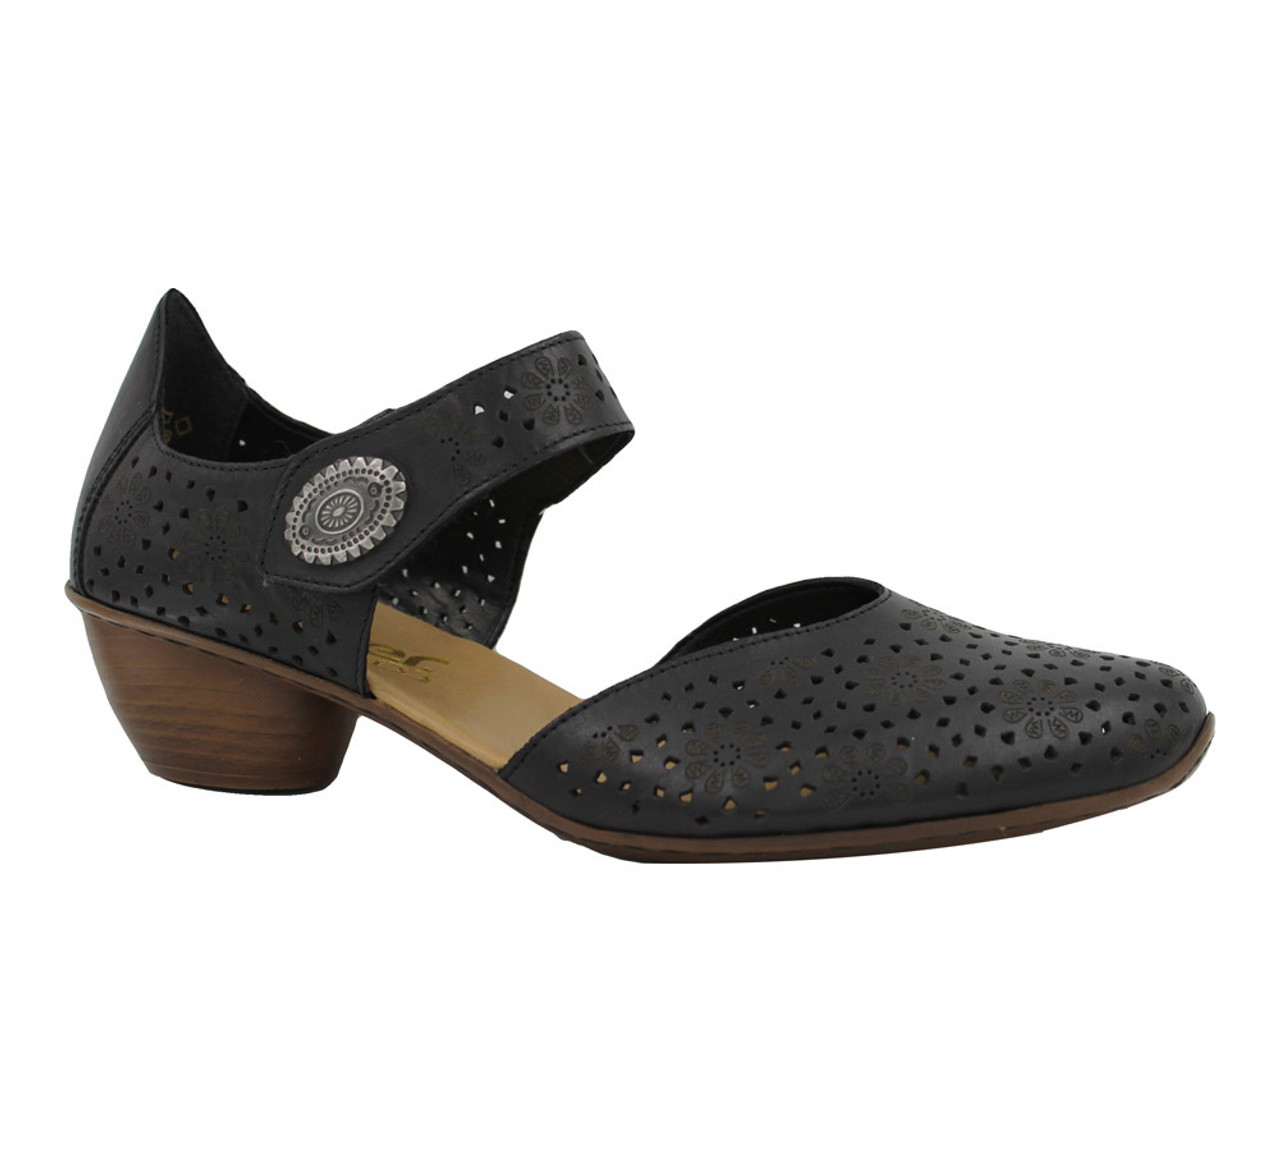 Rieker Women's Mirjam Mary Jane - Black | Discount Ladies Shoes & More - Shoolu.com | Shoolu.com